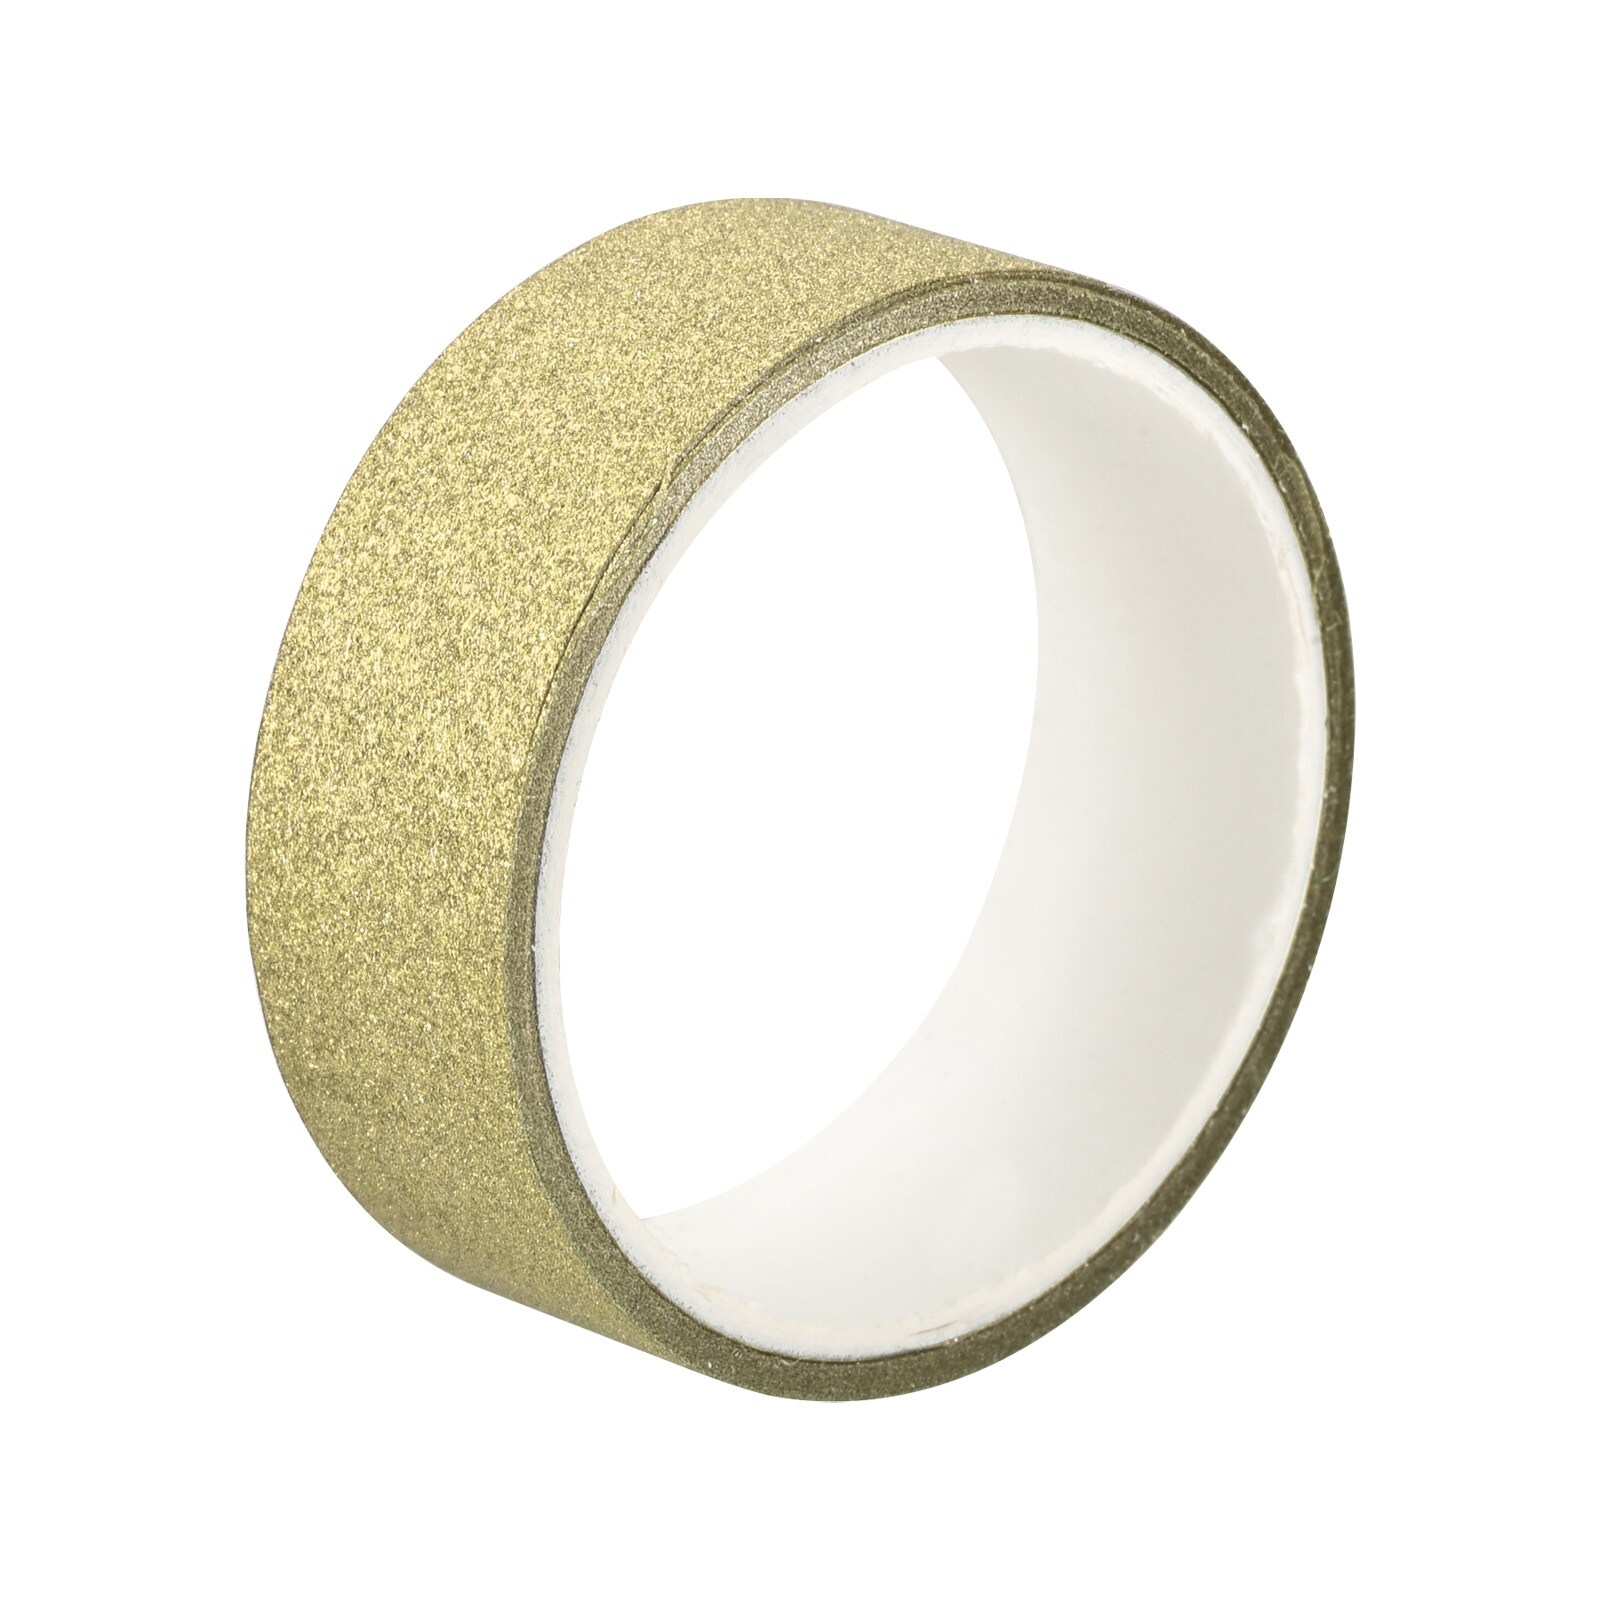 Glitter Tape, Decorative Craft Tape Gold Tone 1.5cm x 3 M - Gold Tone - Bed  Bath & Beyond - 36760374